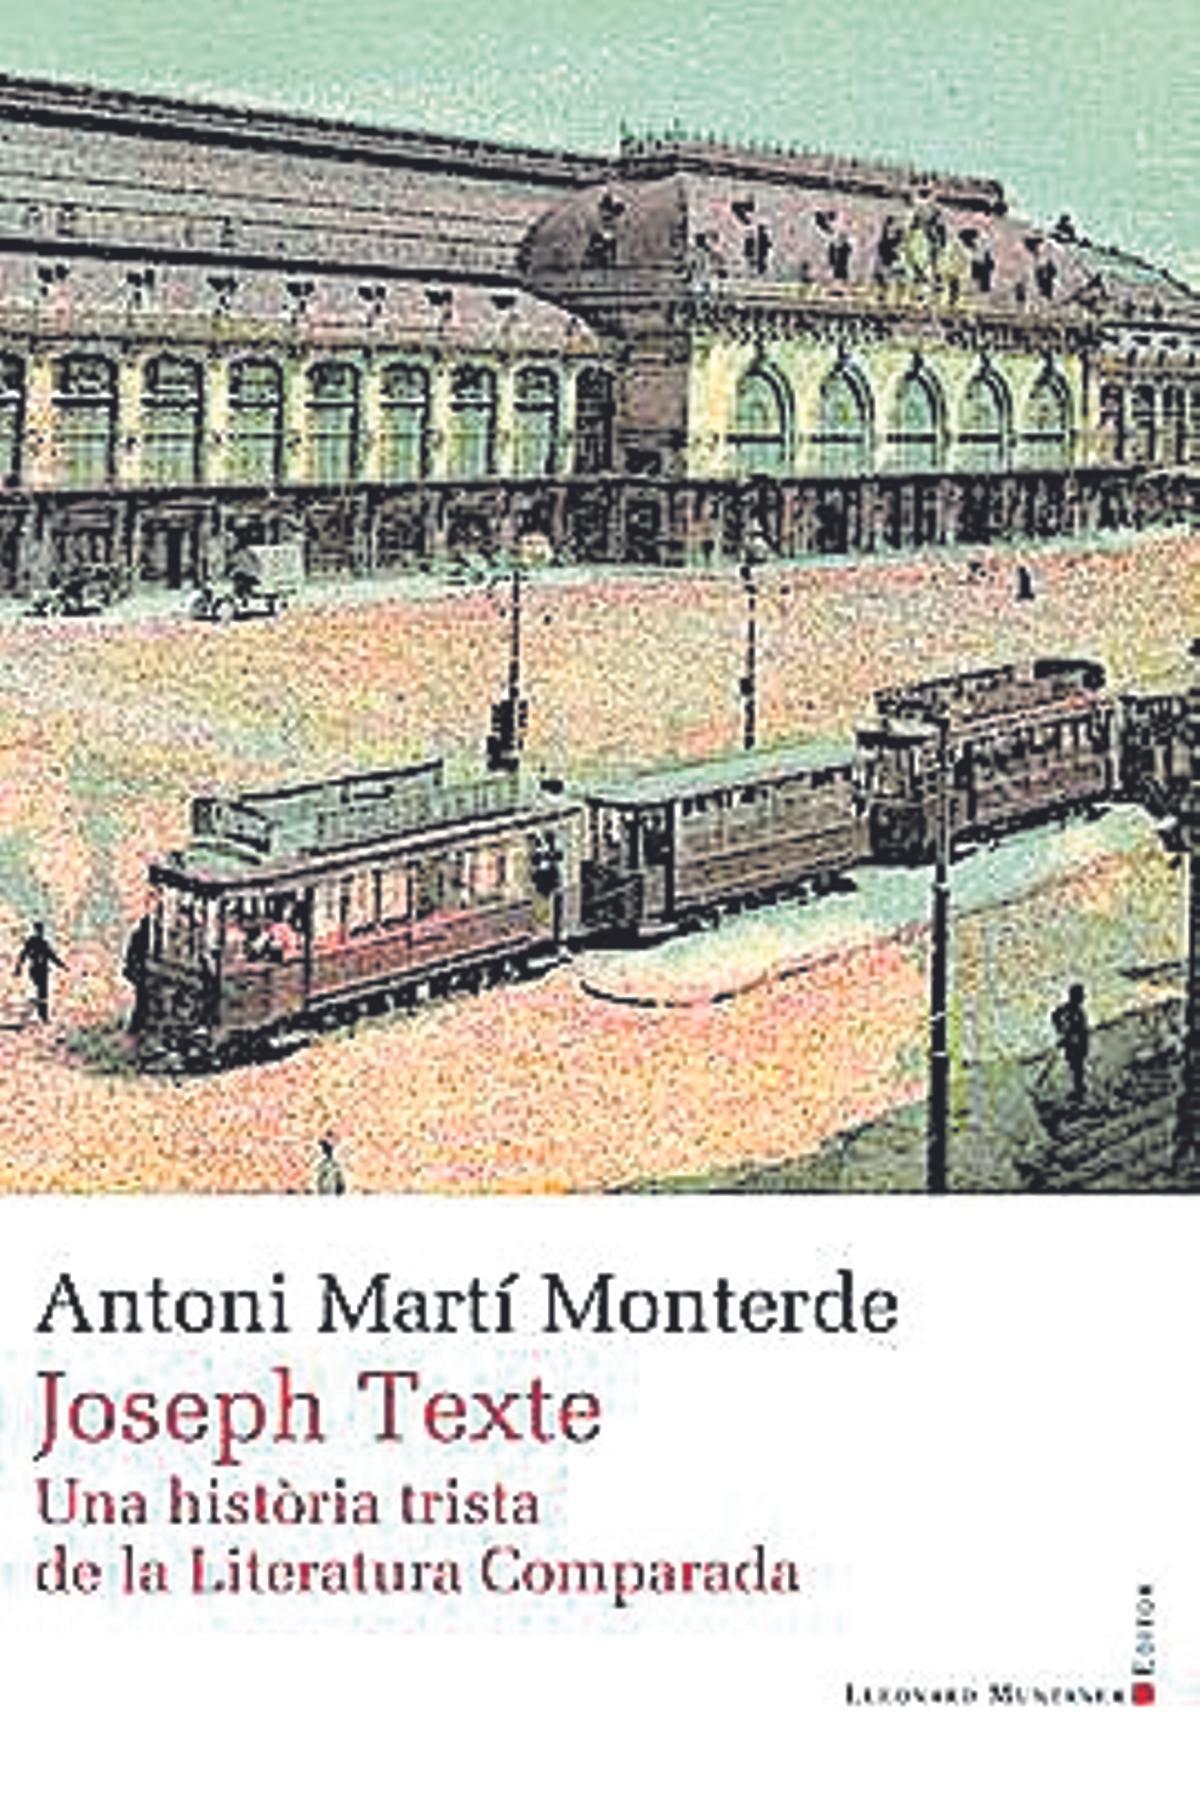 Joseph Texte  Antoni Martí Monterde  Lleonard Muntaner  17 euros